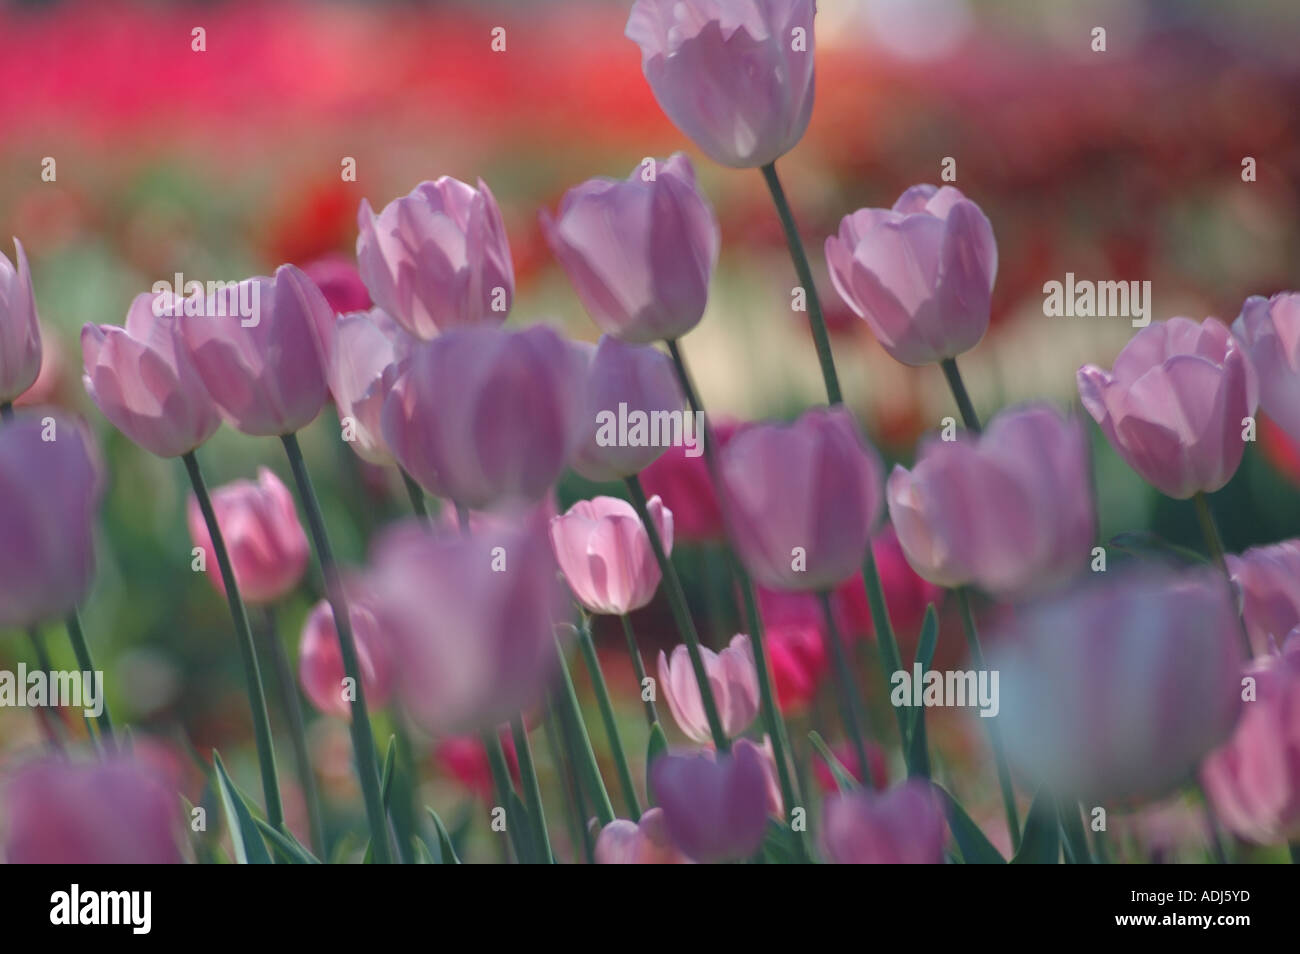 Dream like field of tulips in flower show garden Stock Photo - Alamy